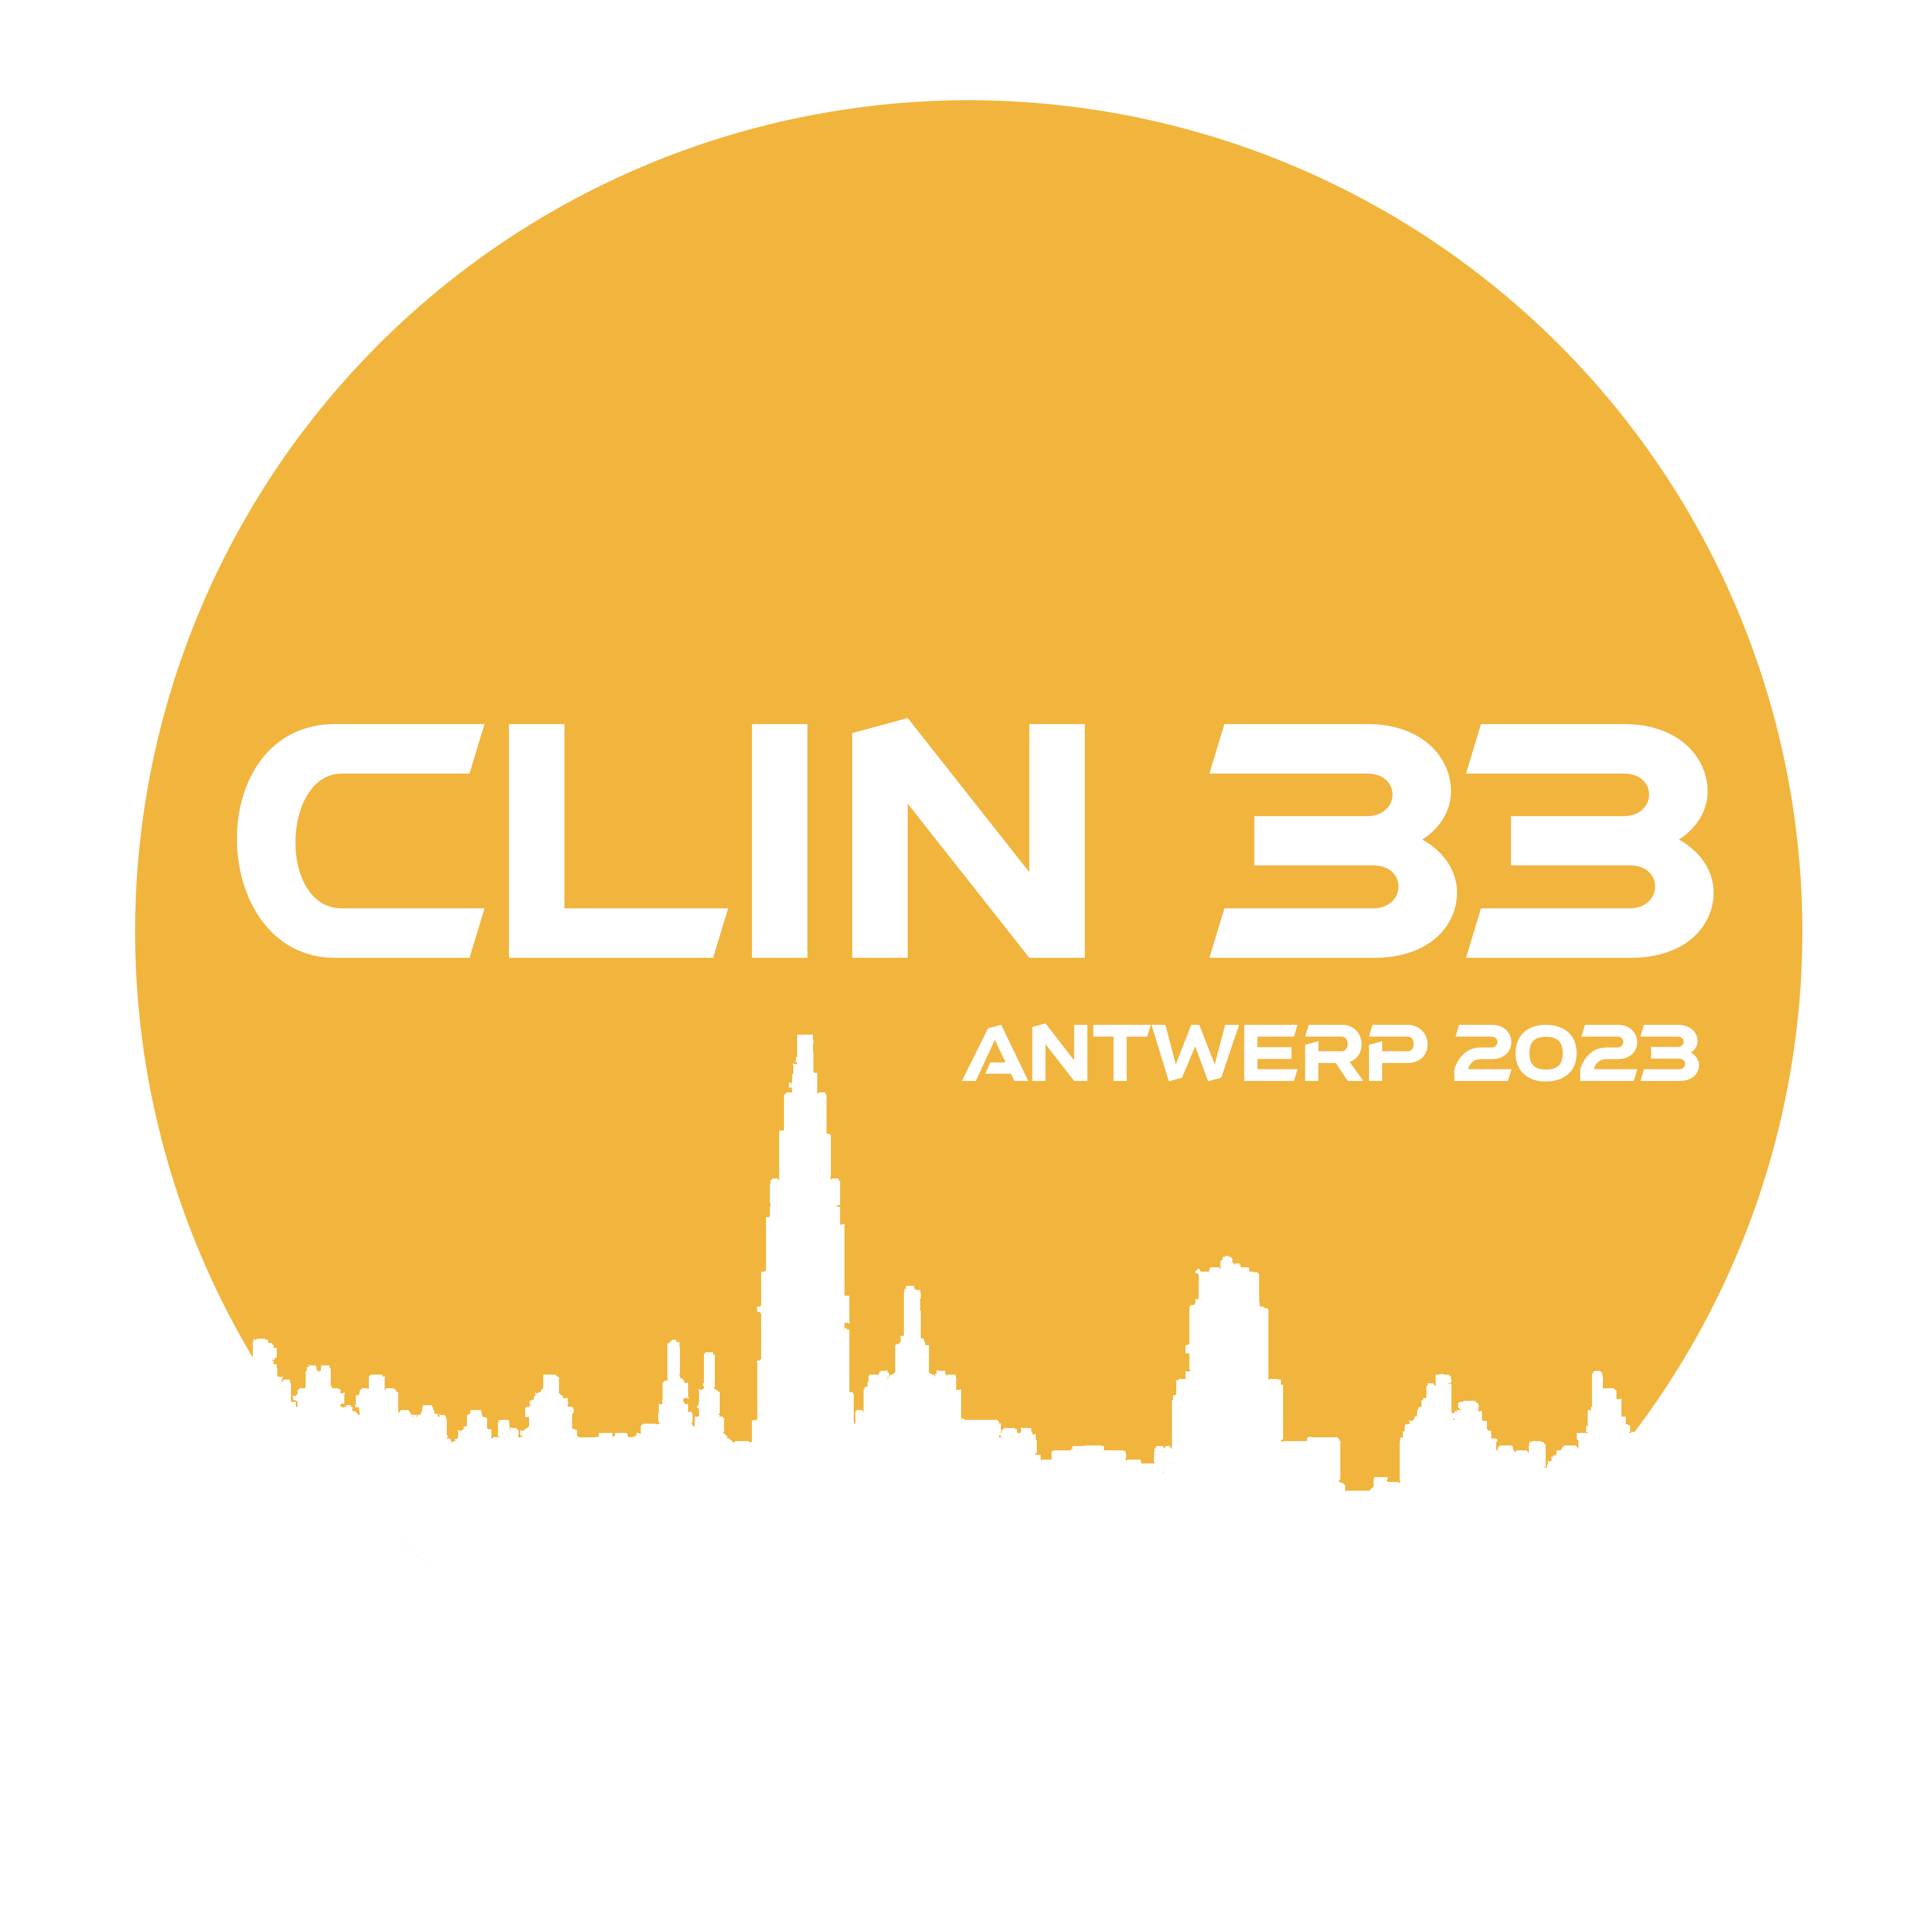 CLIN33